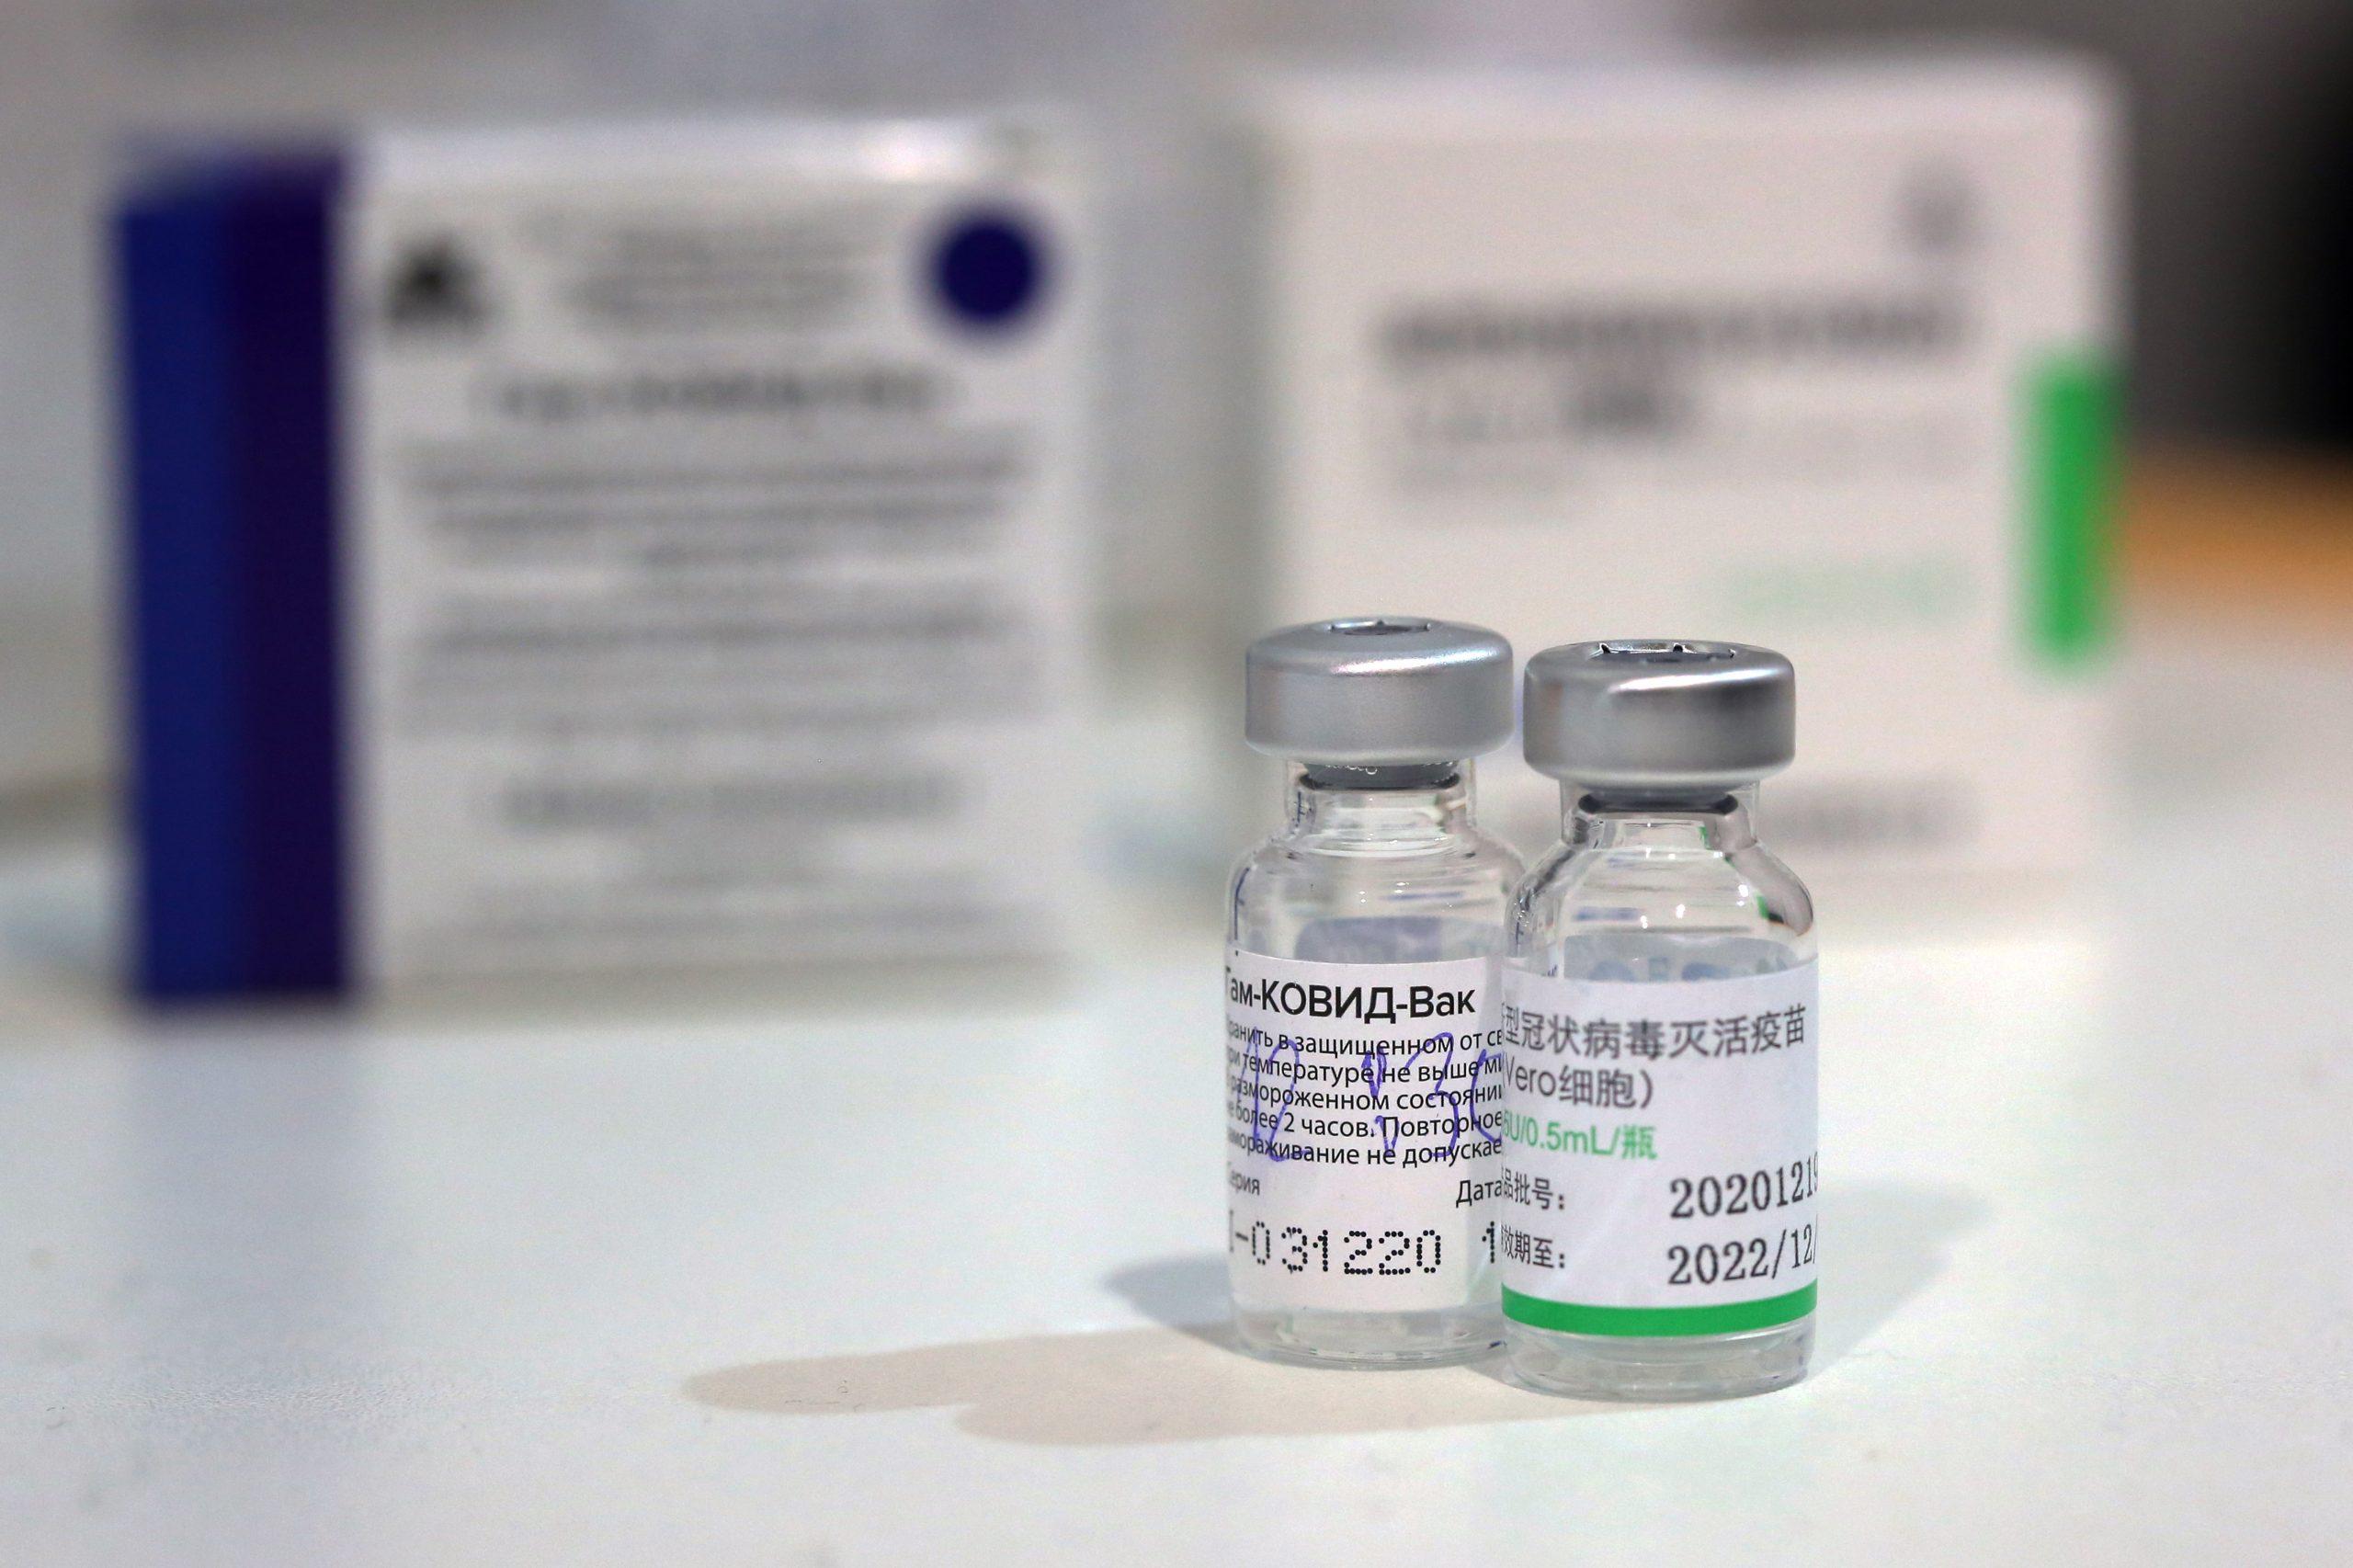 Vacuna rusa Sputnik V tiene una eficacia del 91.6% contra COVID: The Lancet